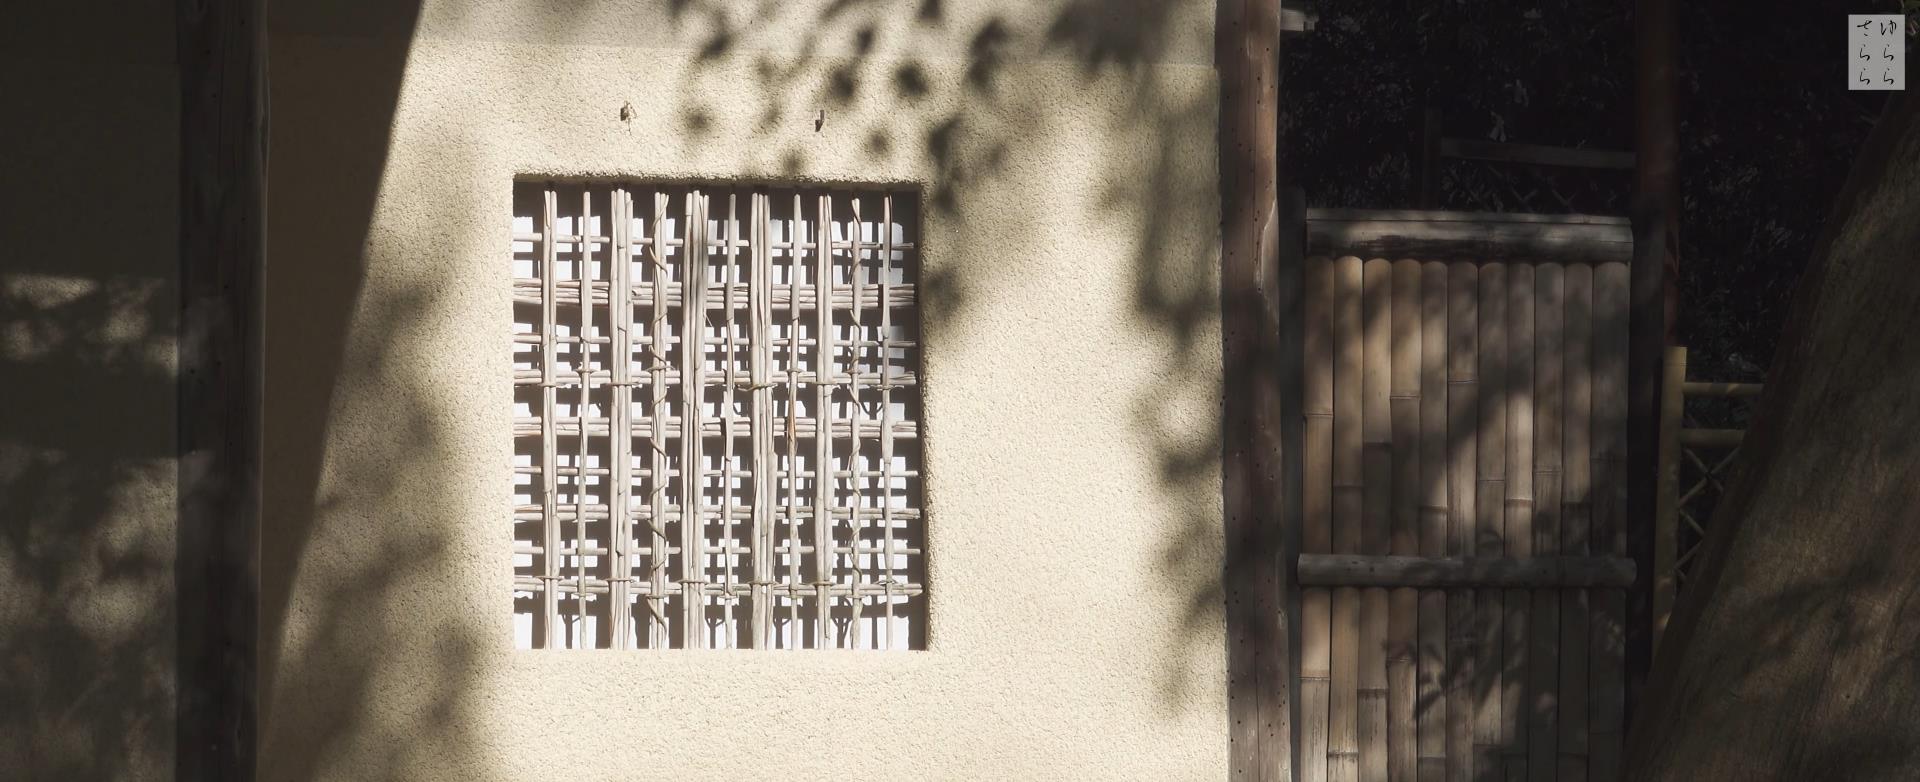 Wabi-Sabi-侘寂庭院,侘寂庭院,京都,侘寂设计,来迎院,RAIGO-IN,侘寂视频下载,日式侘寂庭院